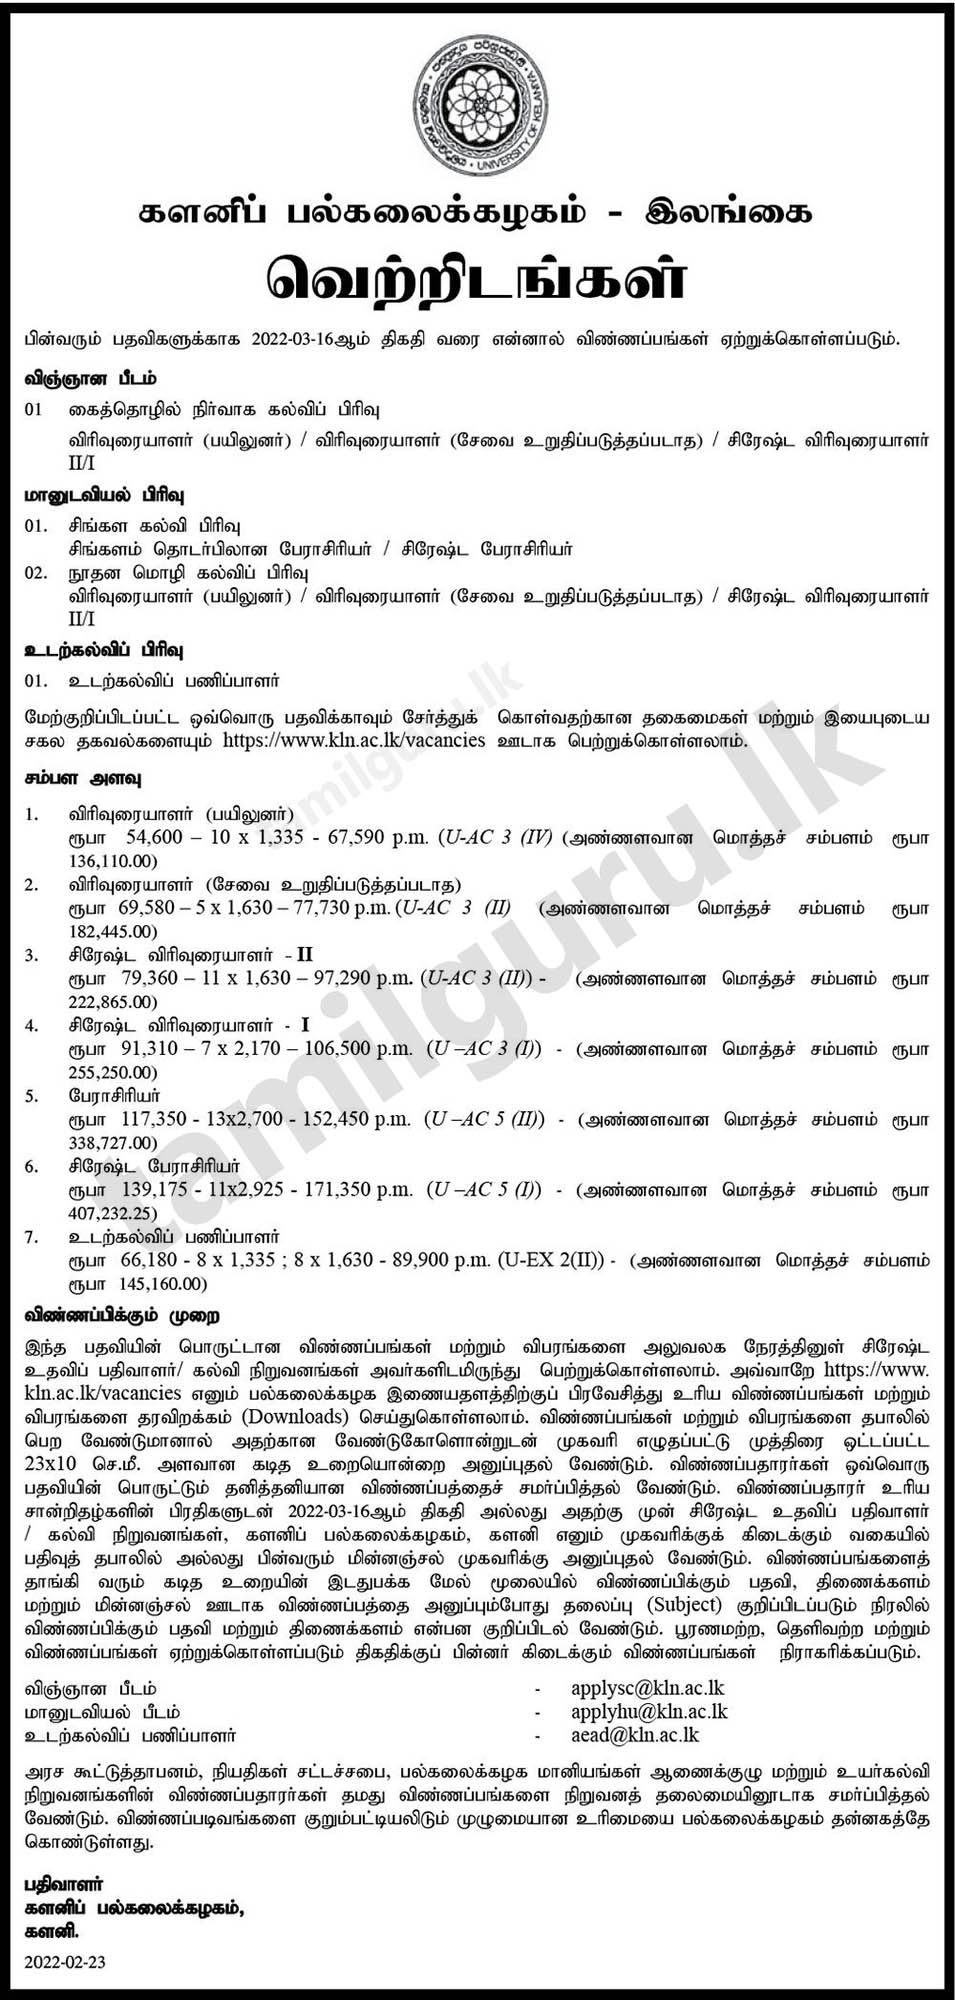 University of Kelaniya Vacancies 2022-02-25 (Lecturer (Probationary / Unconfirmed), Senior Lecturer, Professor, Senior Professor, Director in Physical Education) - Notice in Tamil